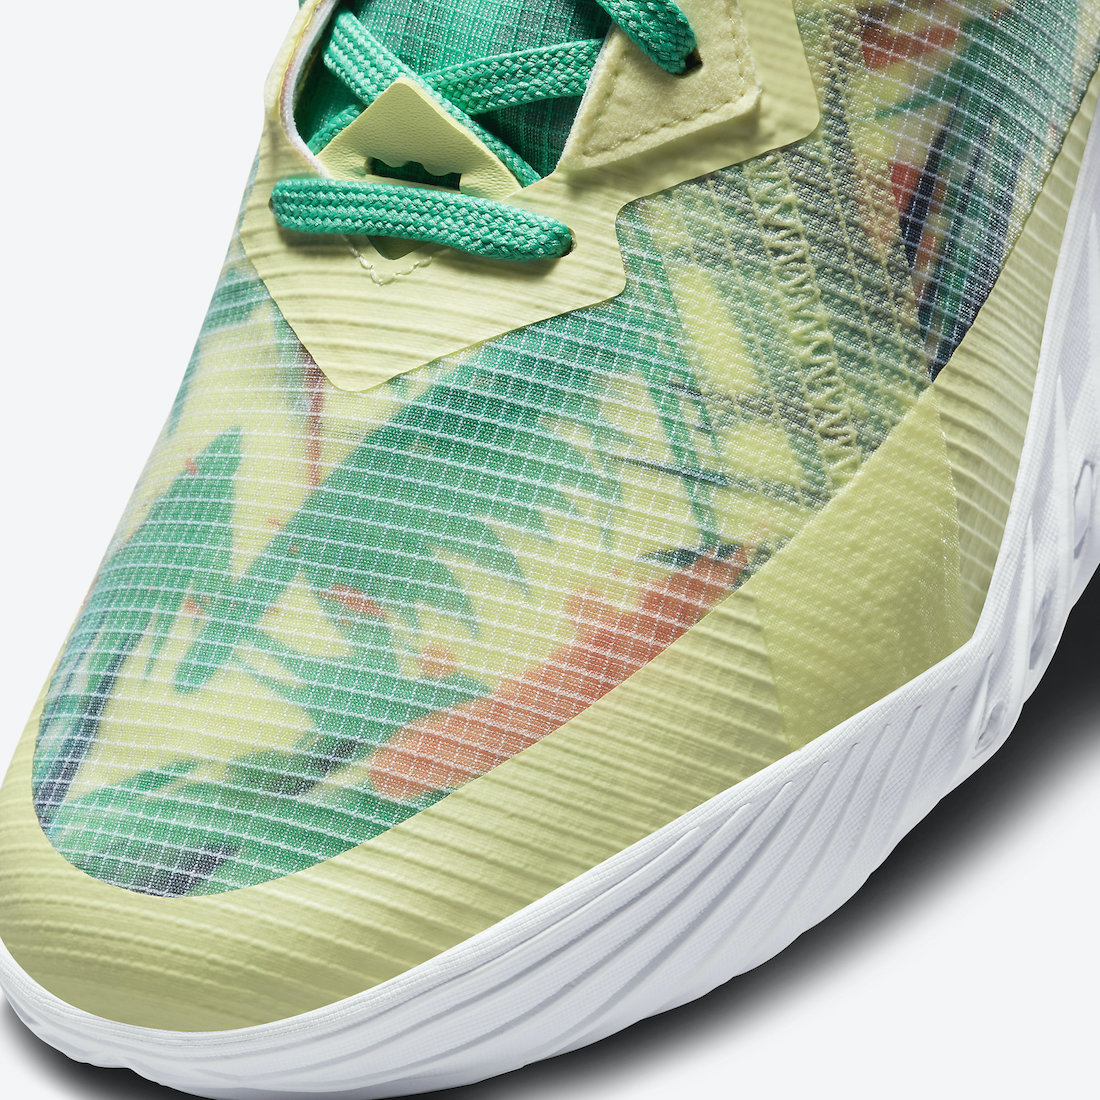 Nike-LeBron-18-Low-LeBronold-Palmer-CV7562-300-Release-Date-6